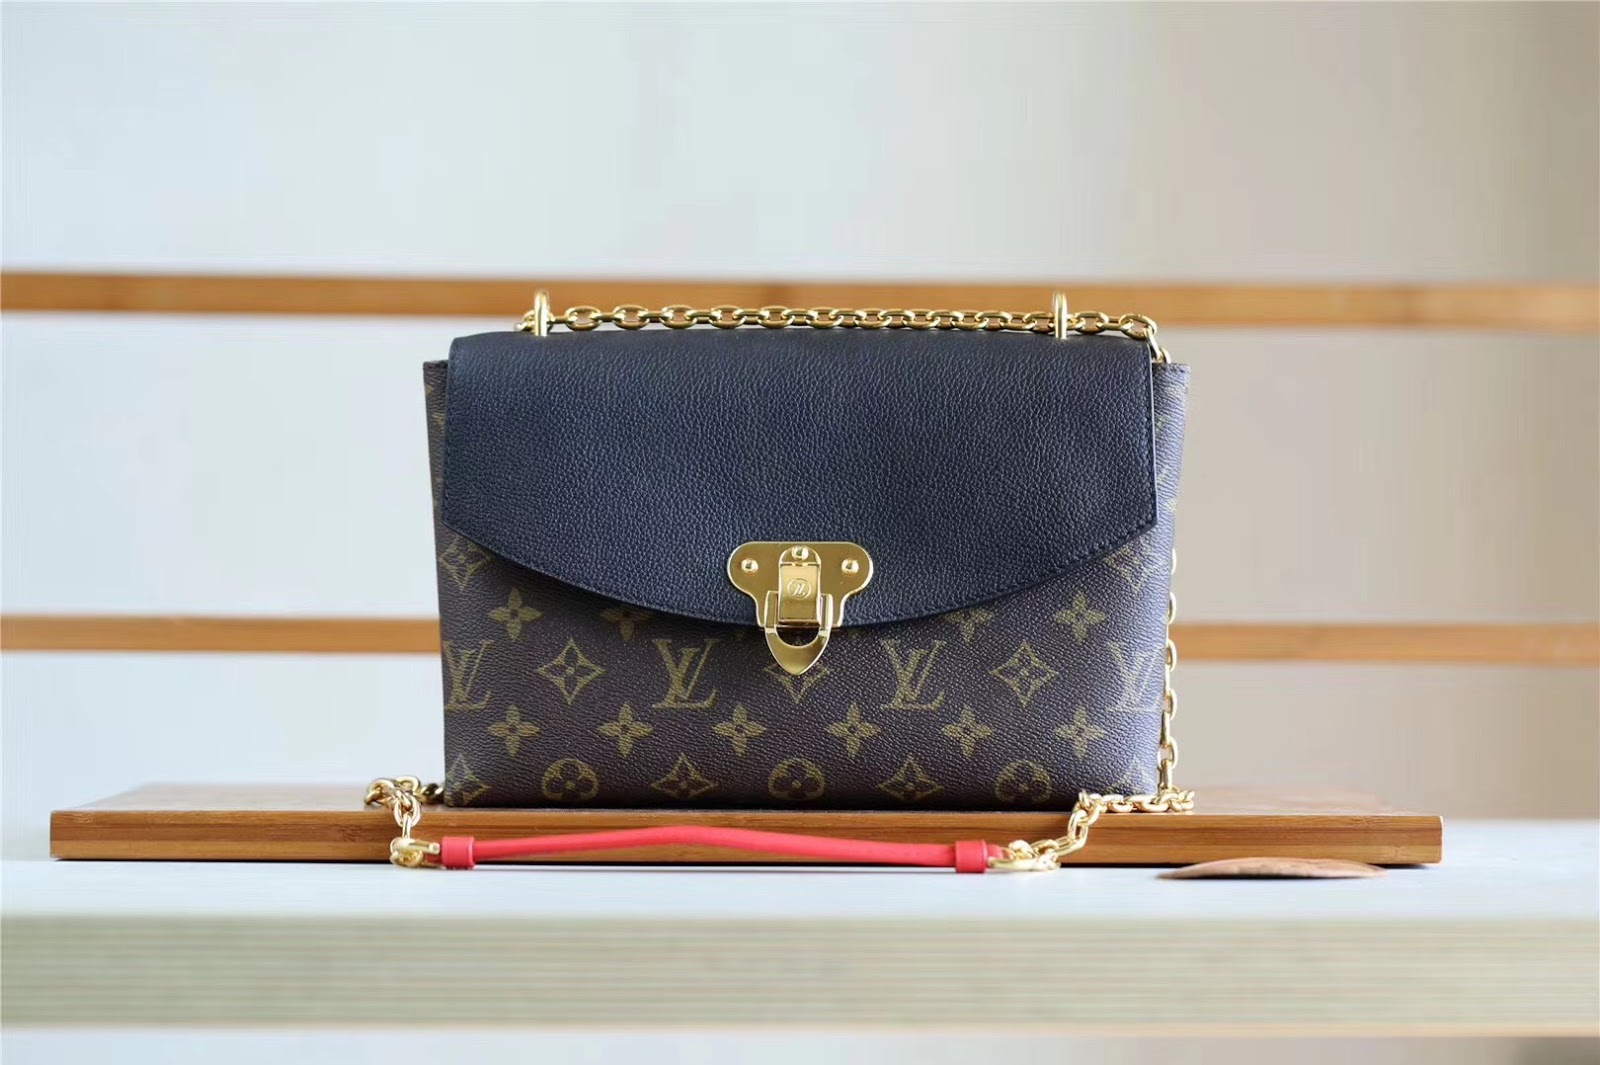 Shopper Share Review: Louis Vuitton Saint Placide Bag M43715 From www.semadata.org